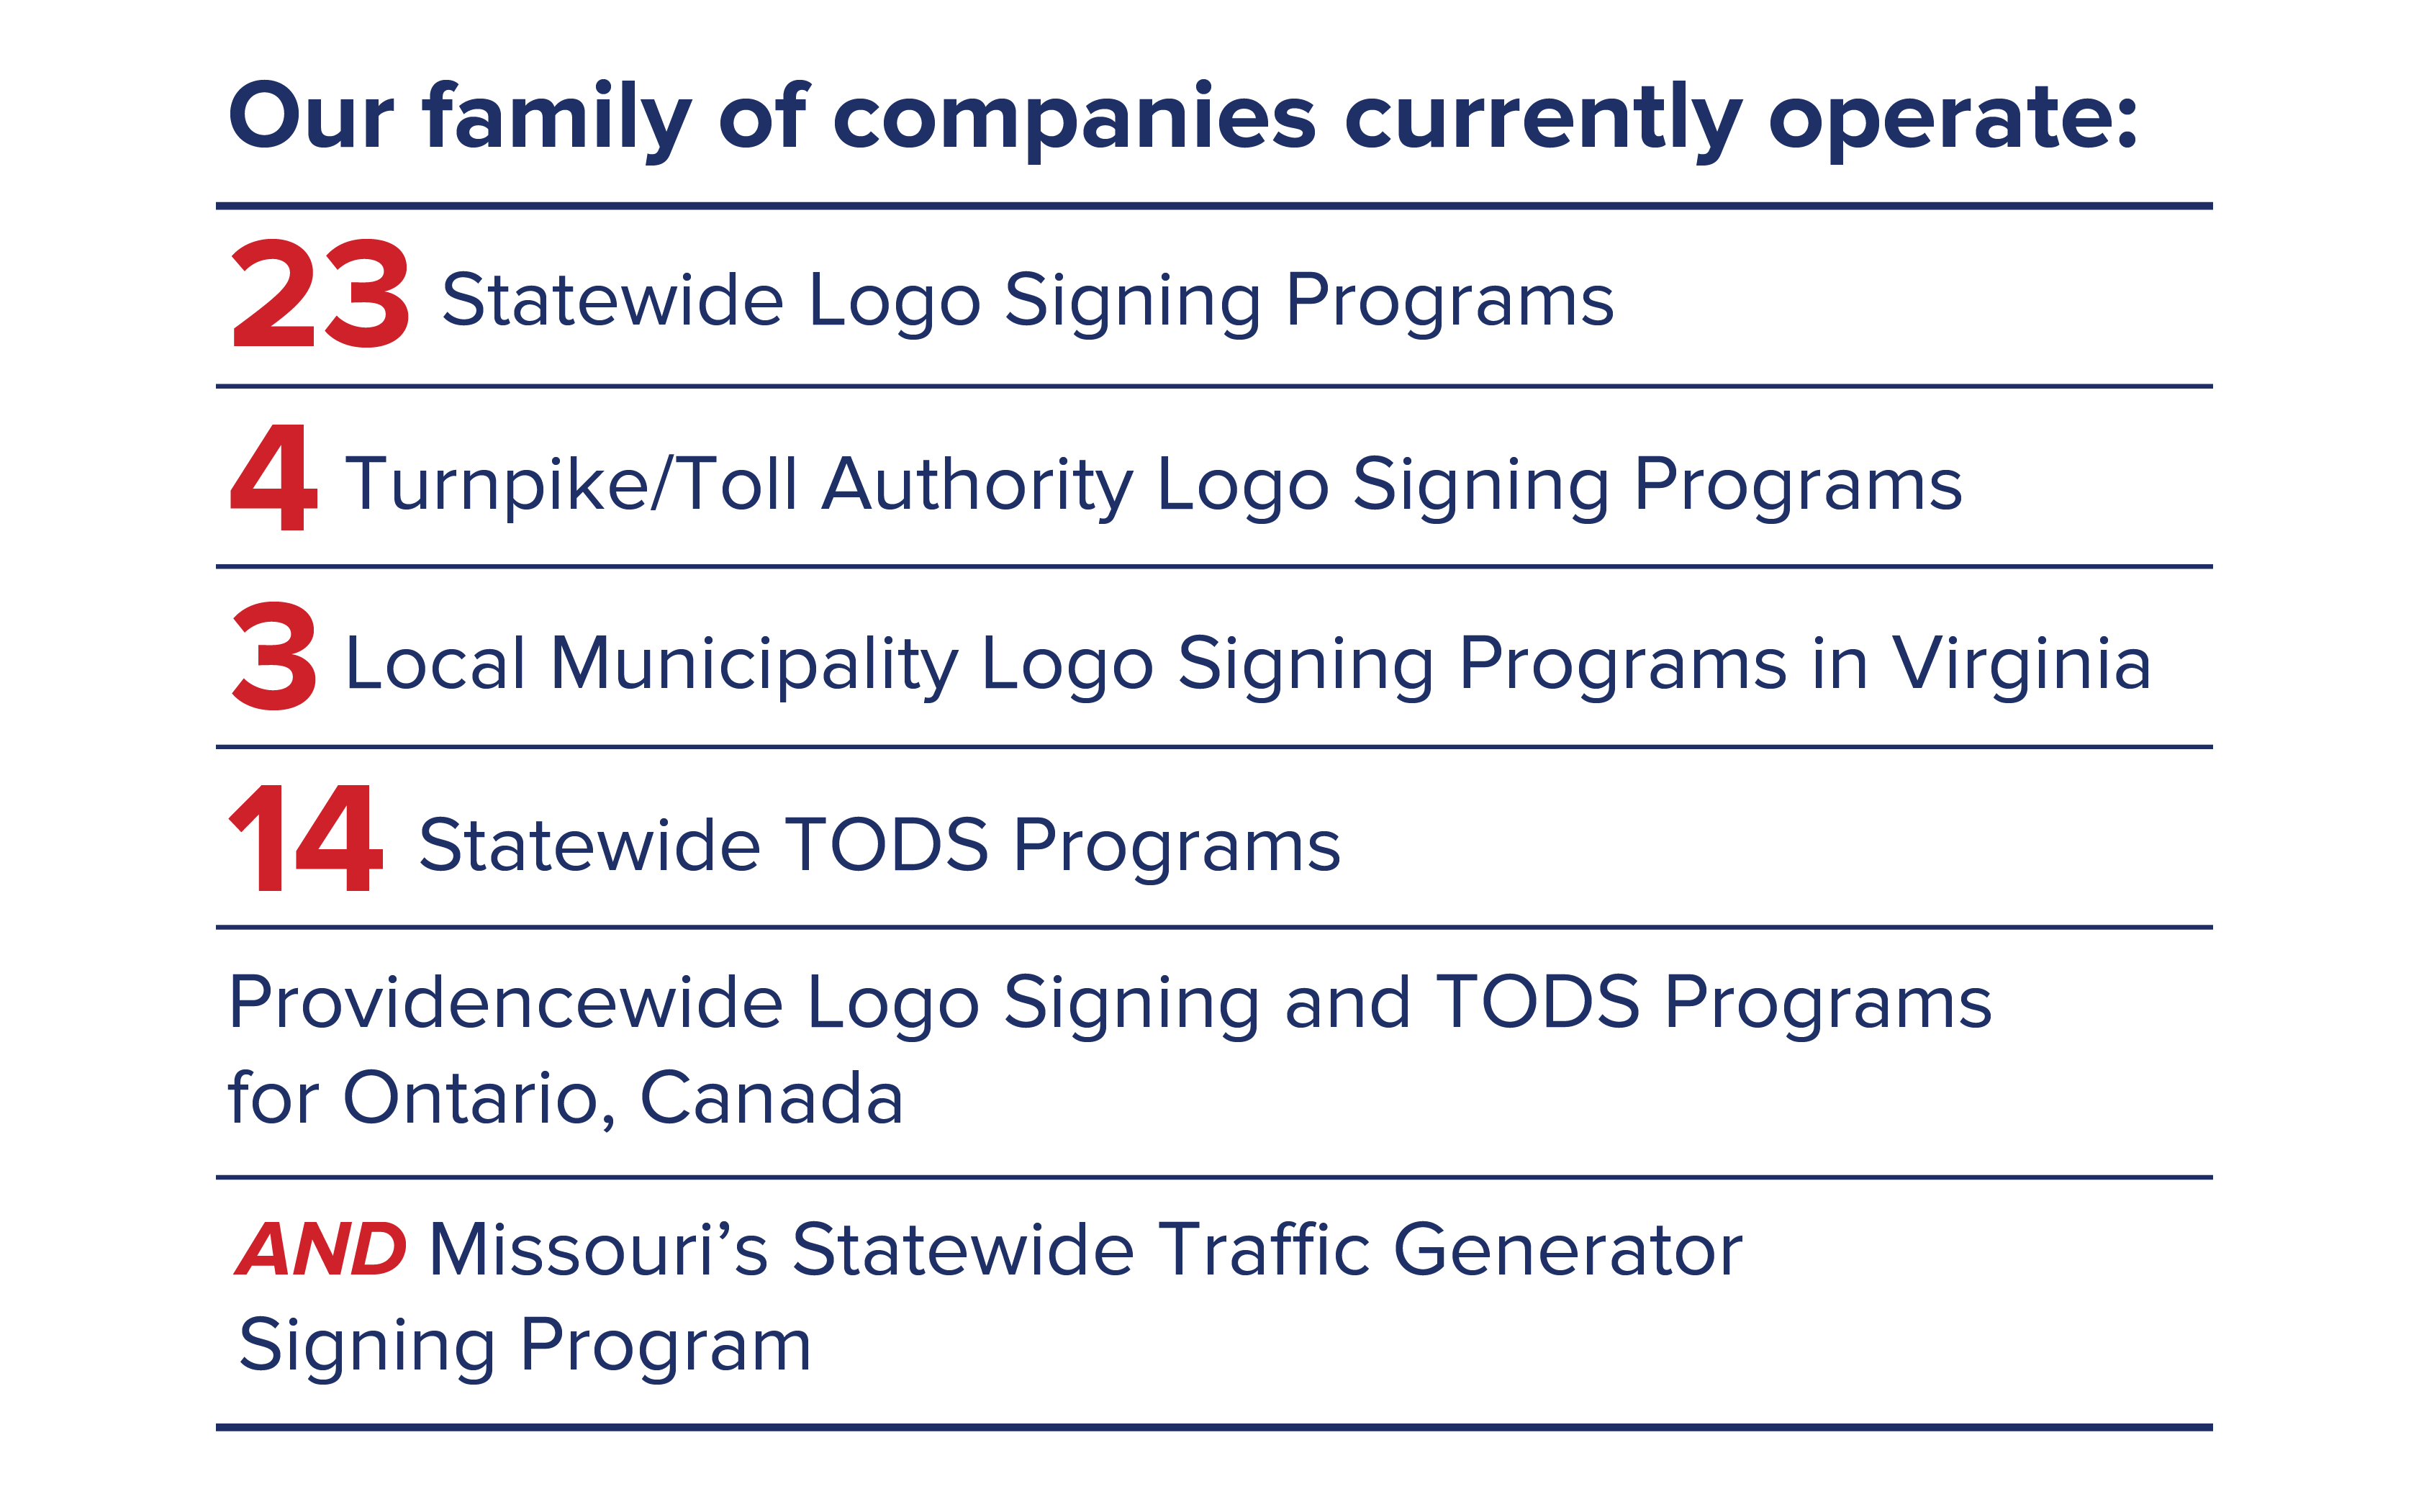 Interstate Logos Program Experience